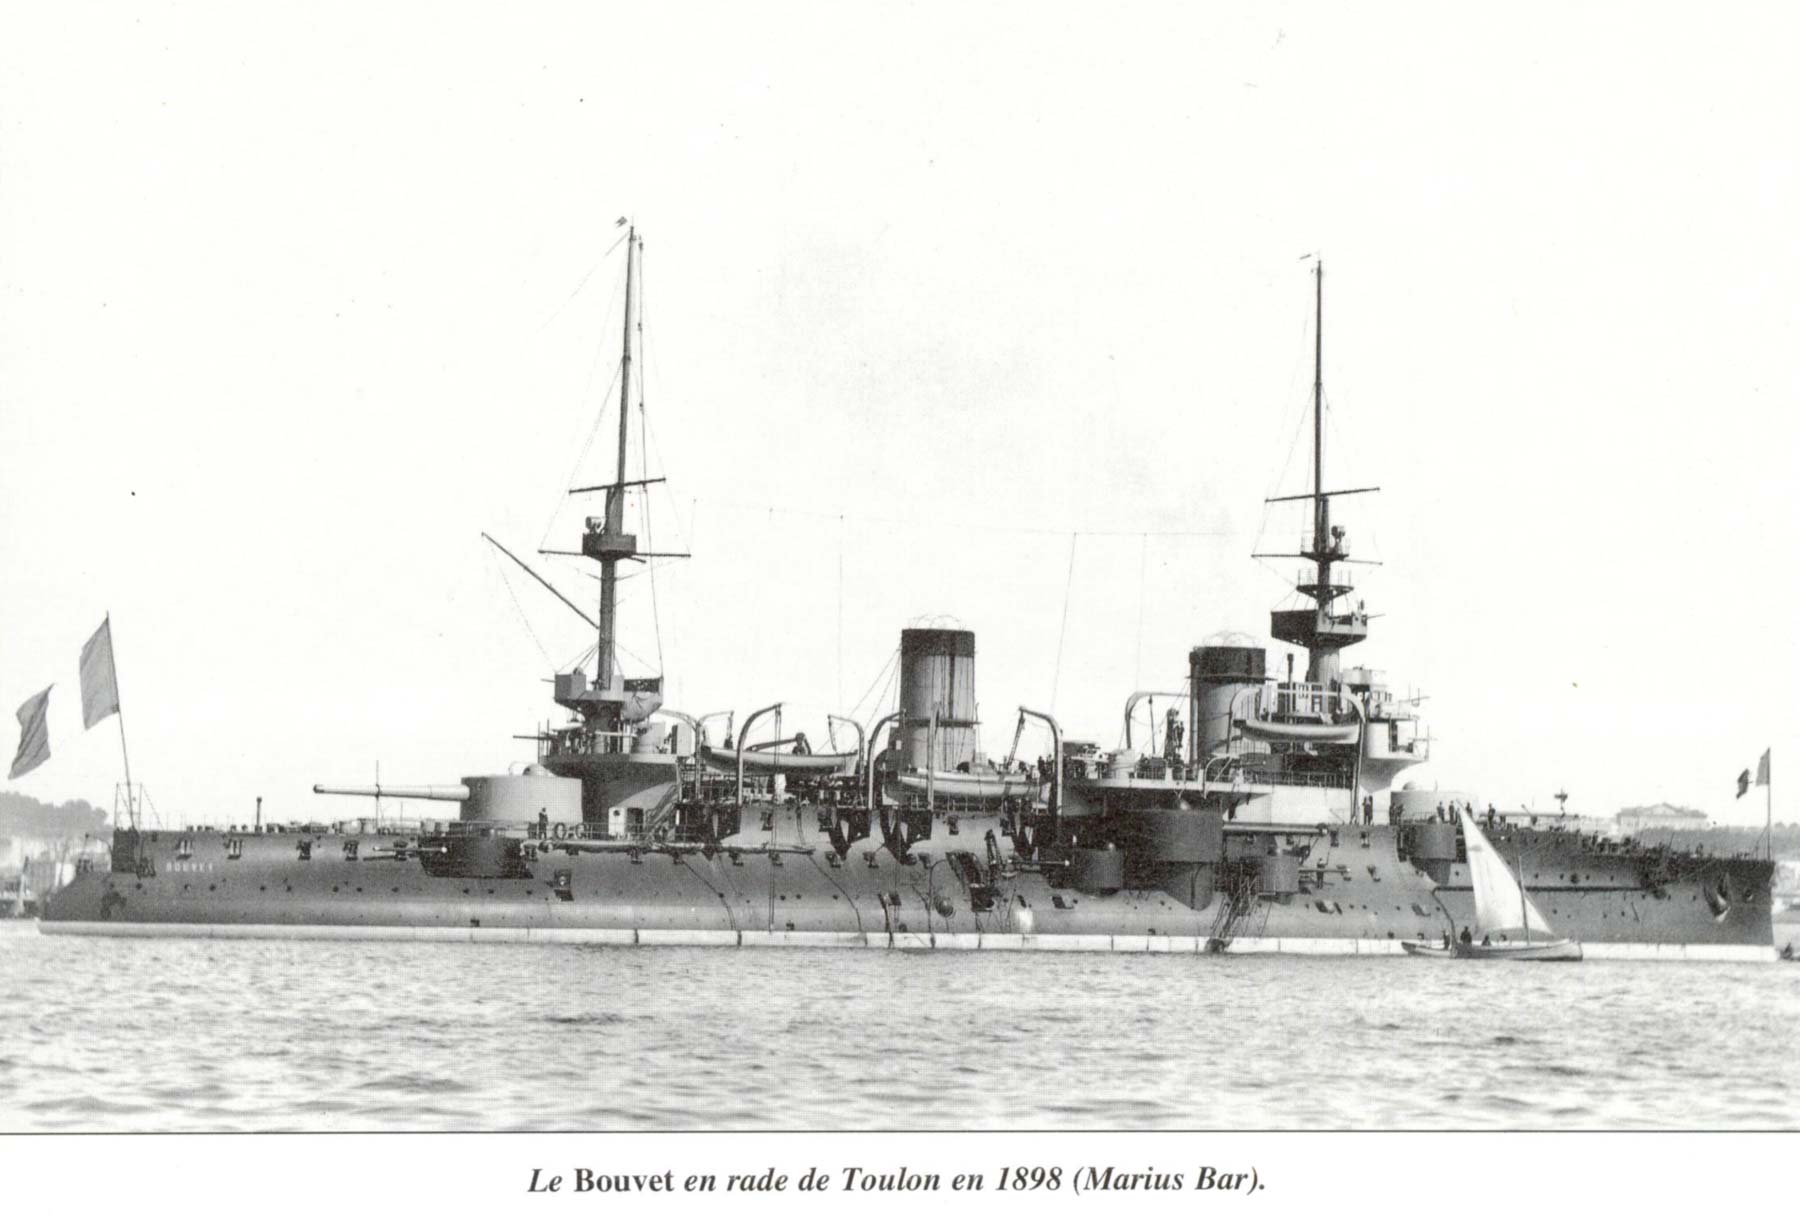 Le Bouvet - French predreadnought battleship